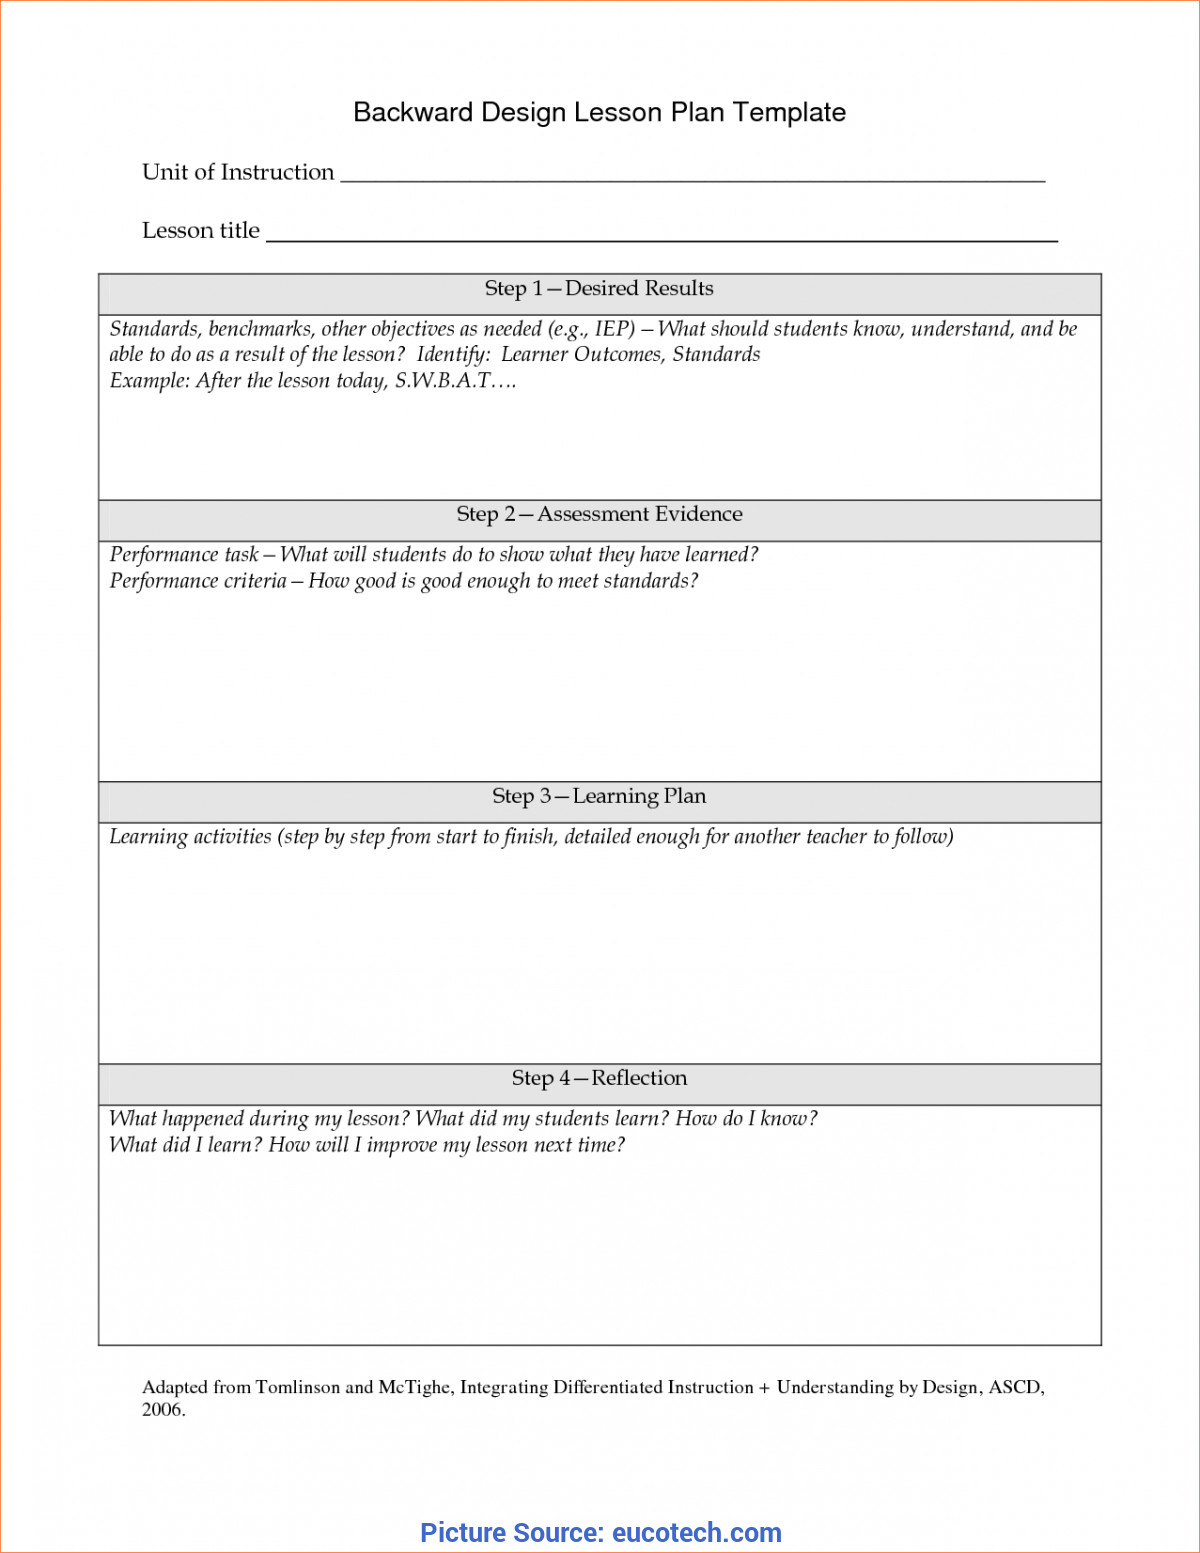 Backward Design Lesson Plan Template Plex Daily Lesson Log for Grade 6 Rubrics assessment